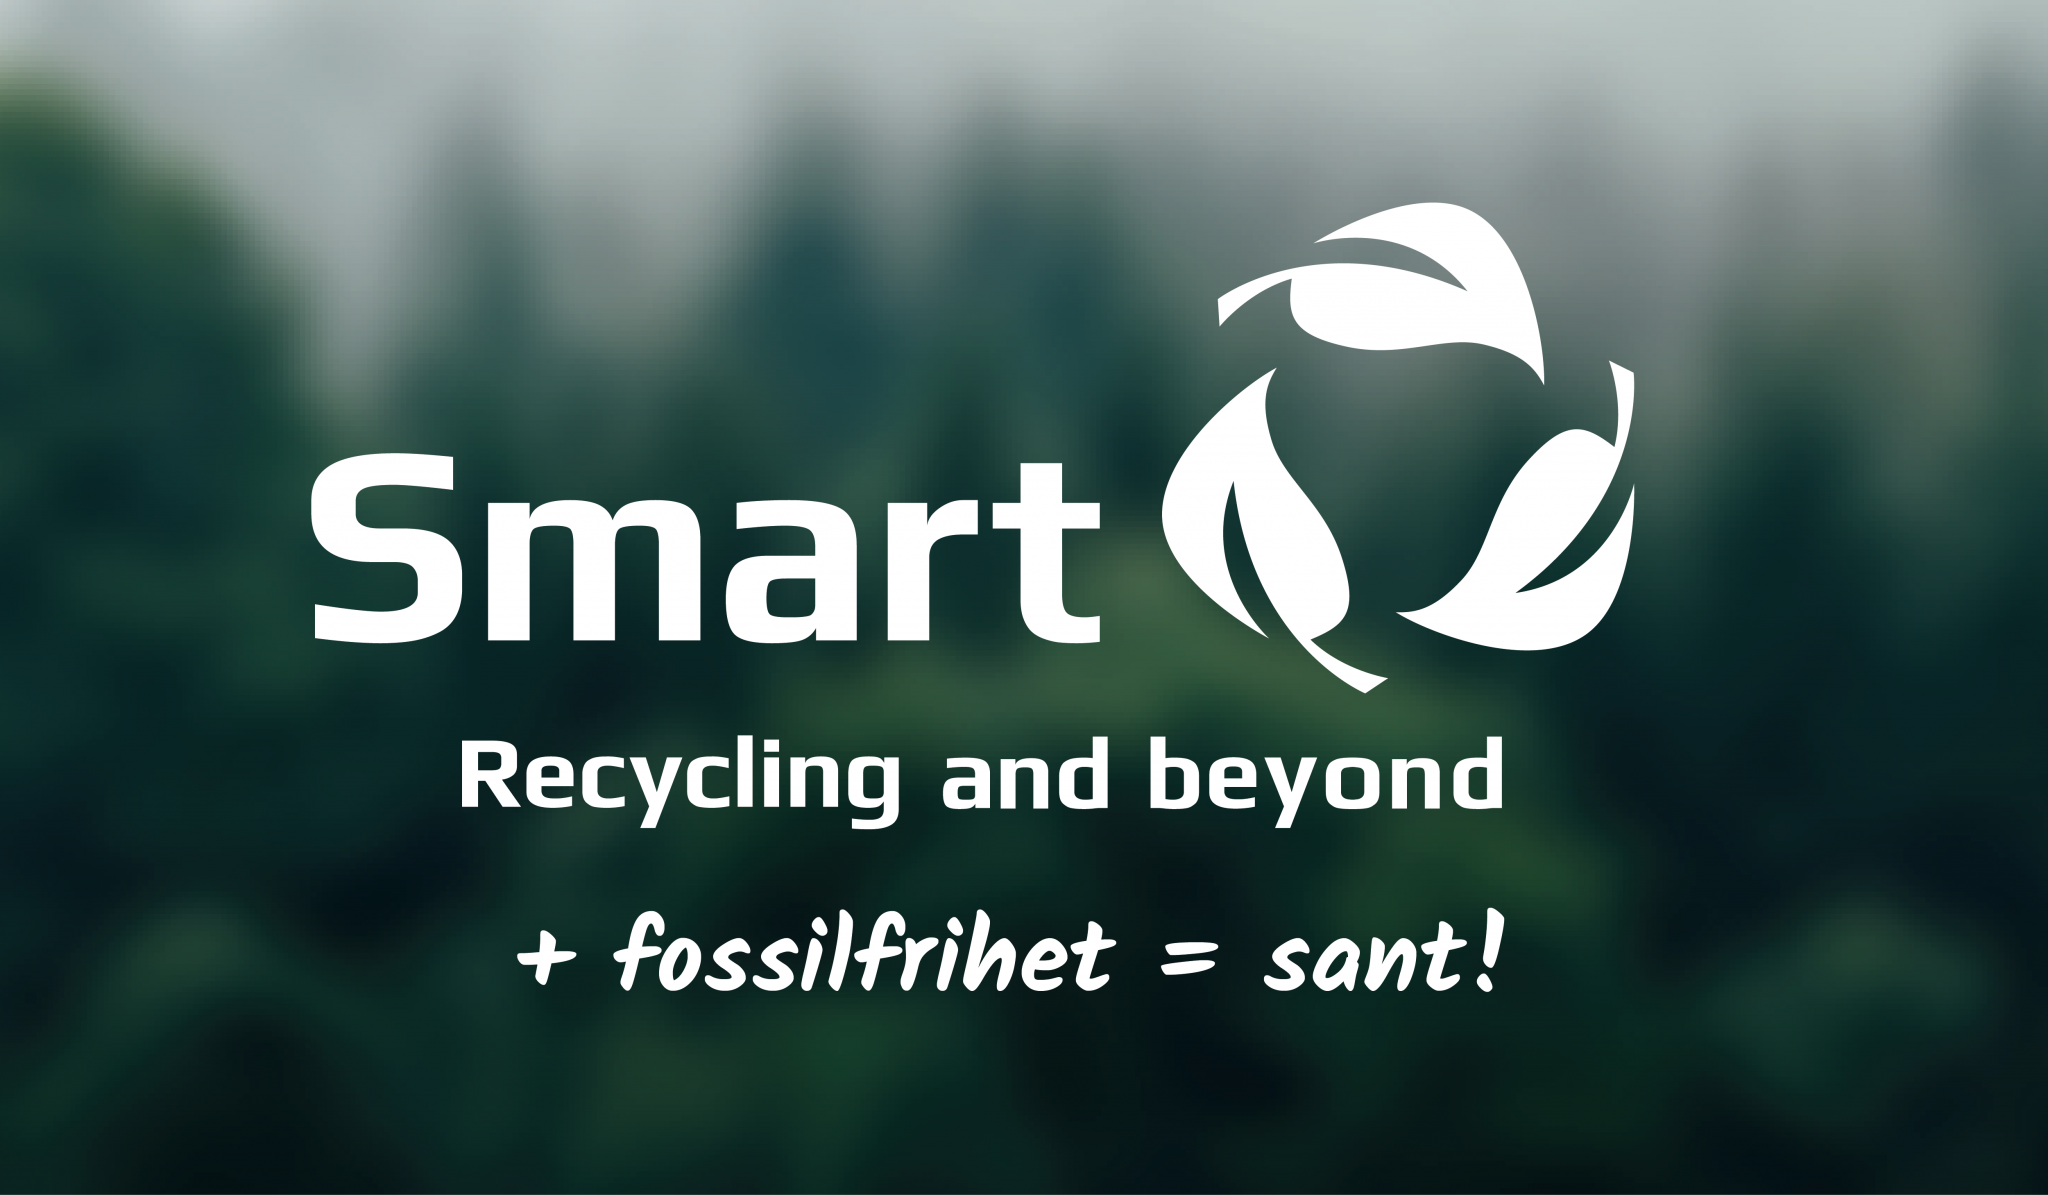 Featured image for “Vi ökar hållbarheten med biogas”